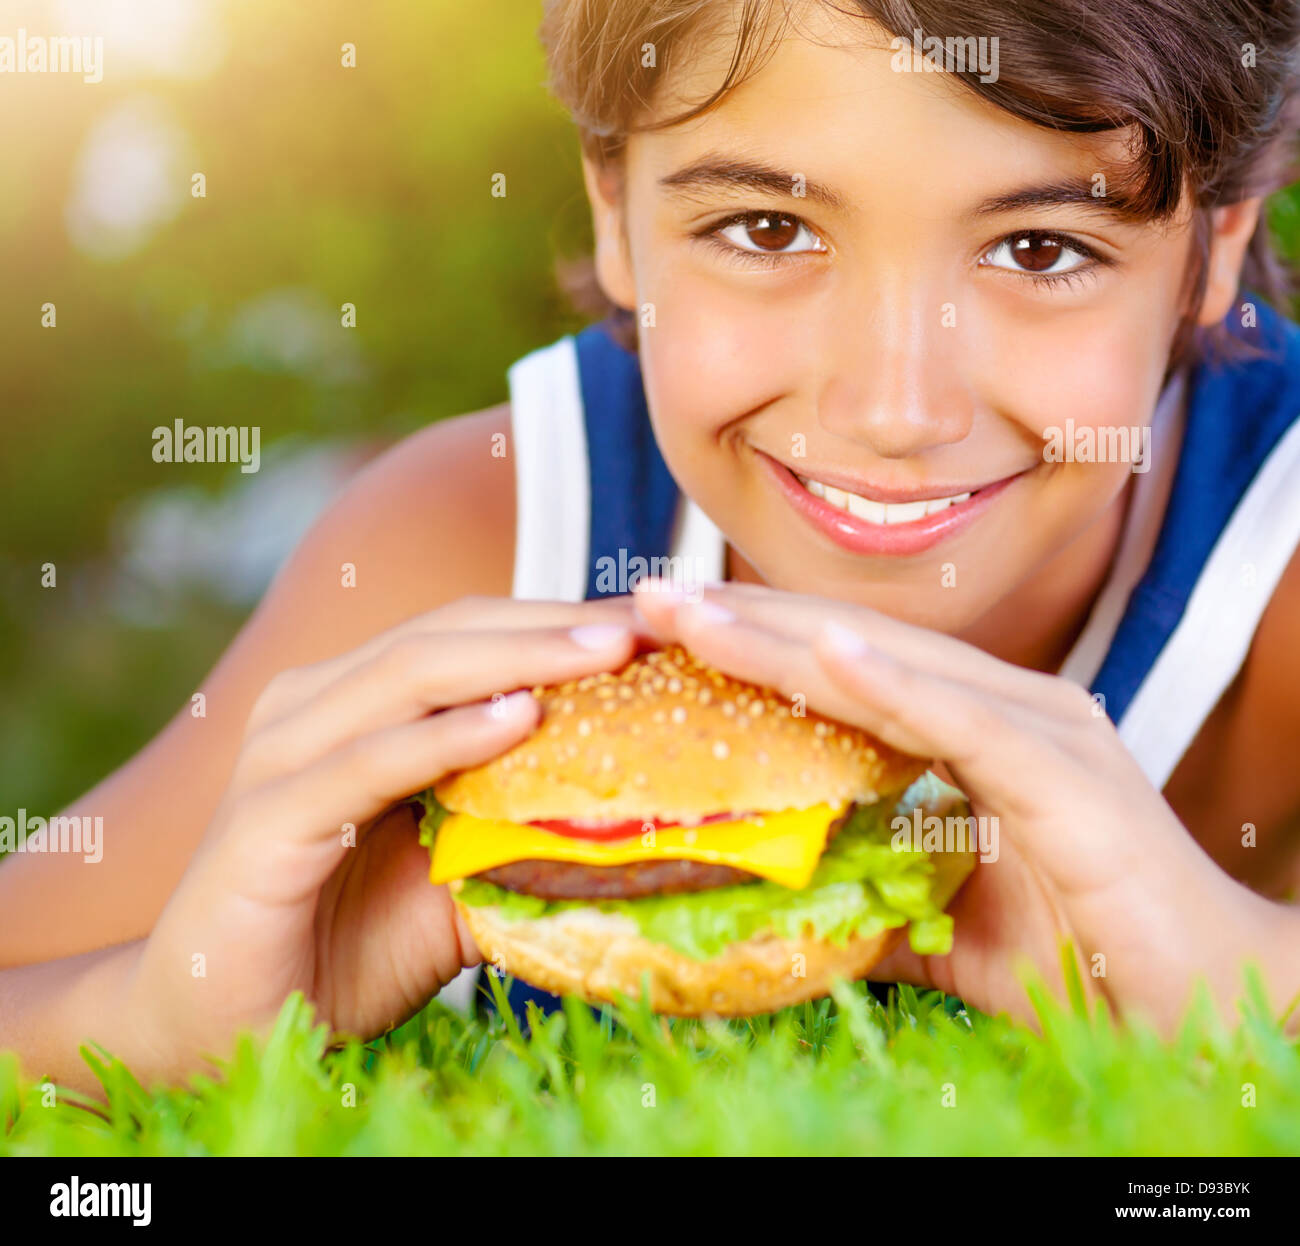 Closeup portrait of cute happy boy eating big tasty fatty burger outdoors, lying down on green field and enjoying sandwich Stock Photo